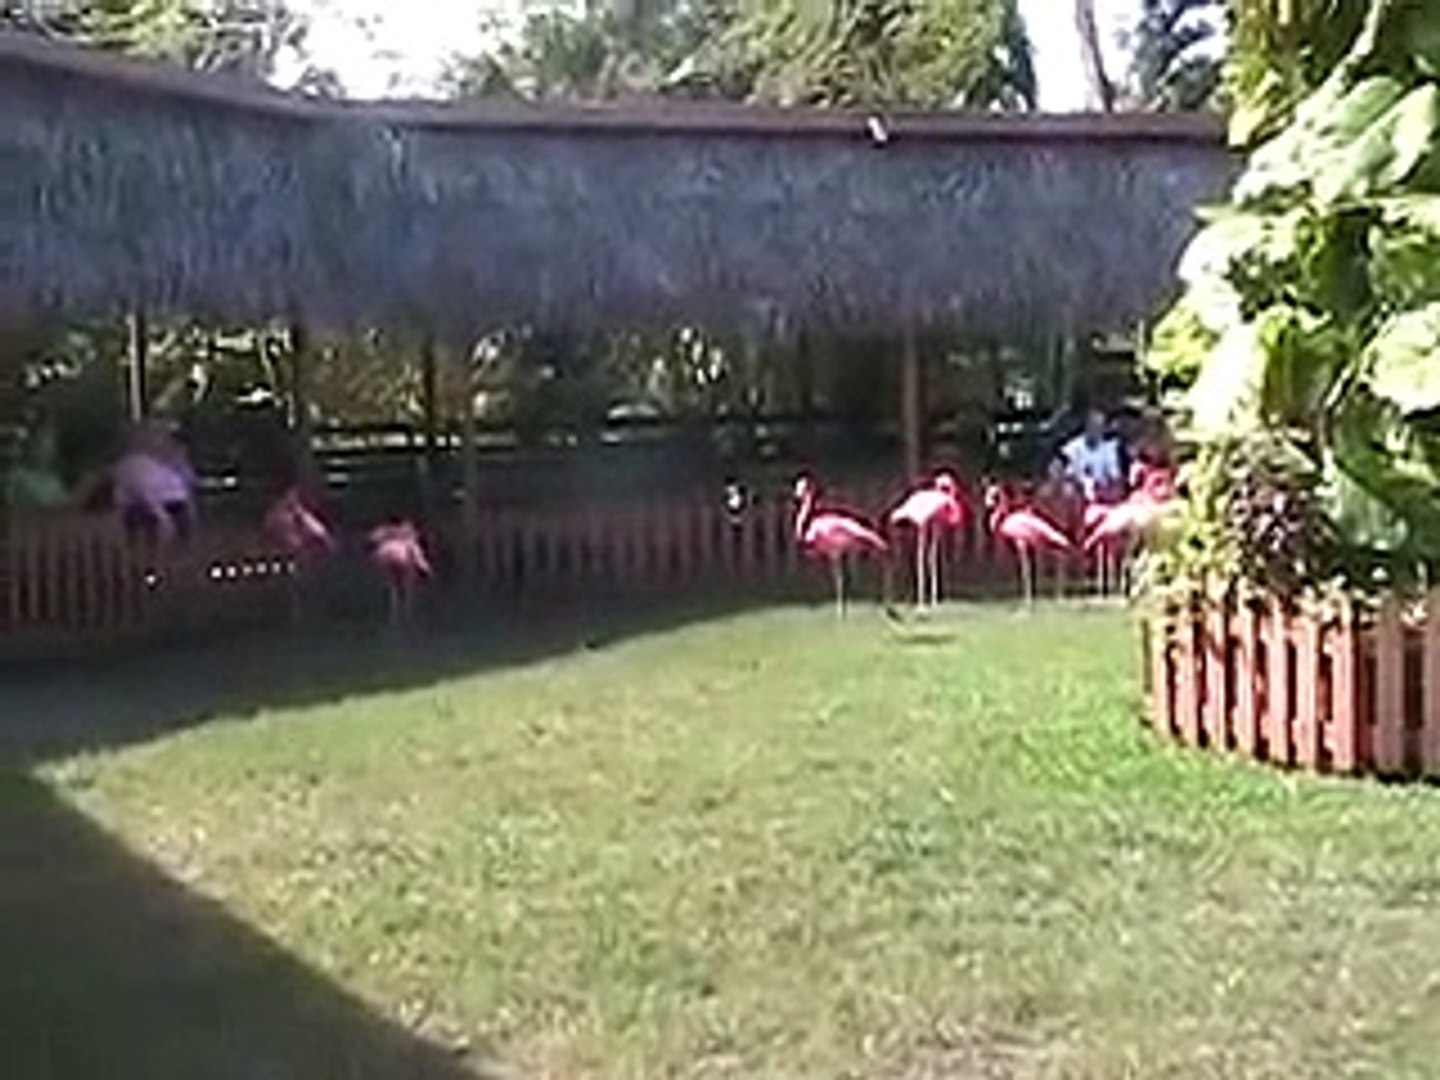 Marching Flamingos